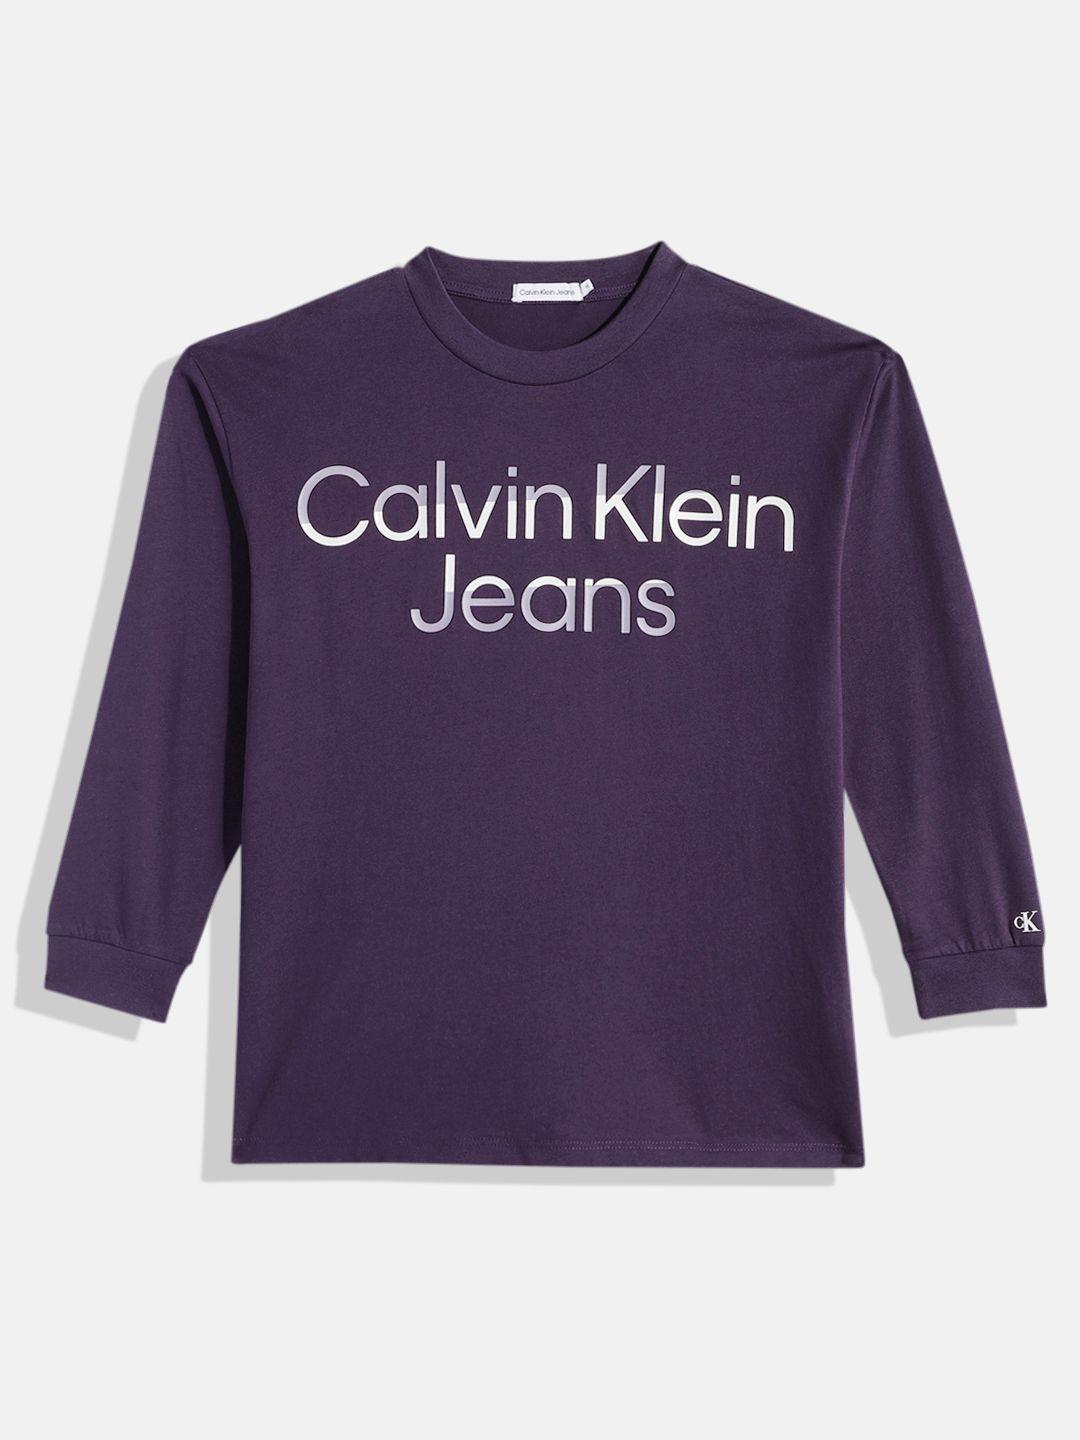 calvin klein jeans boys brand logo printed pure cotton t-shirt